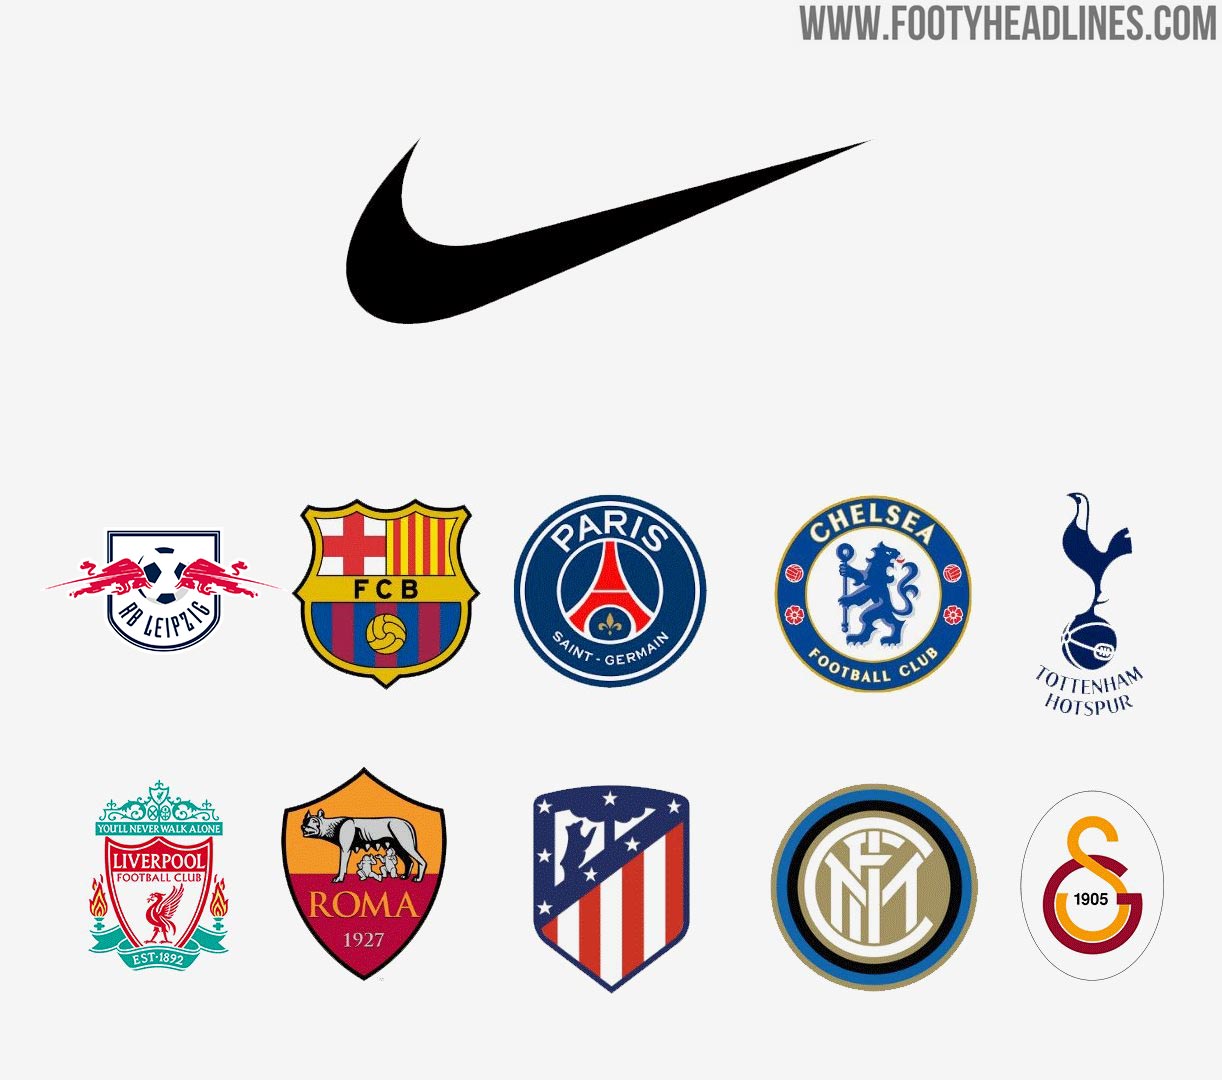 Adidas, Nike & Puma Pyramids Of Football Kit Sponsorships - Footy